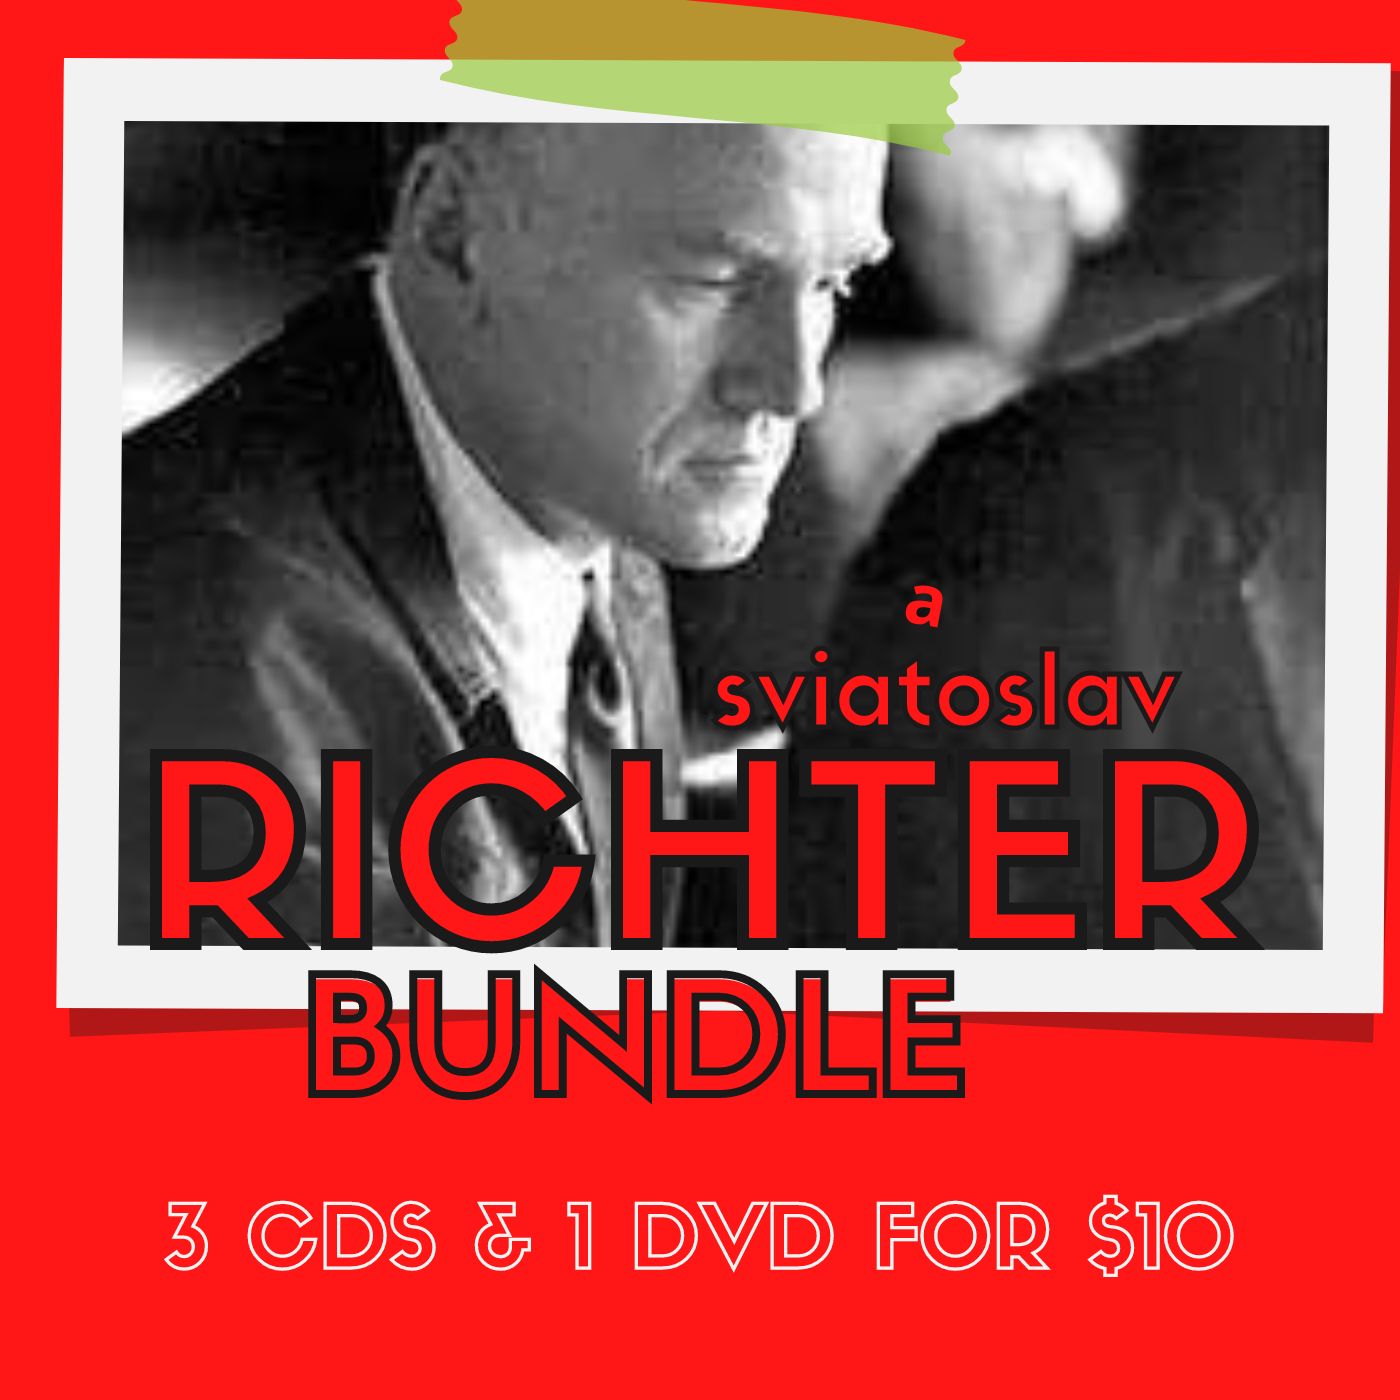 THE SVIATOSLAV RICHTER BUNDLE - 3 CDS, 1 DVDS FOR $10